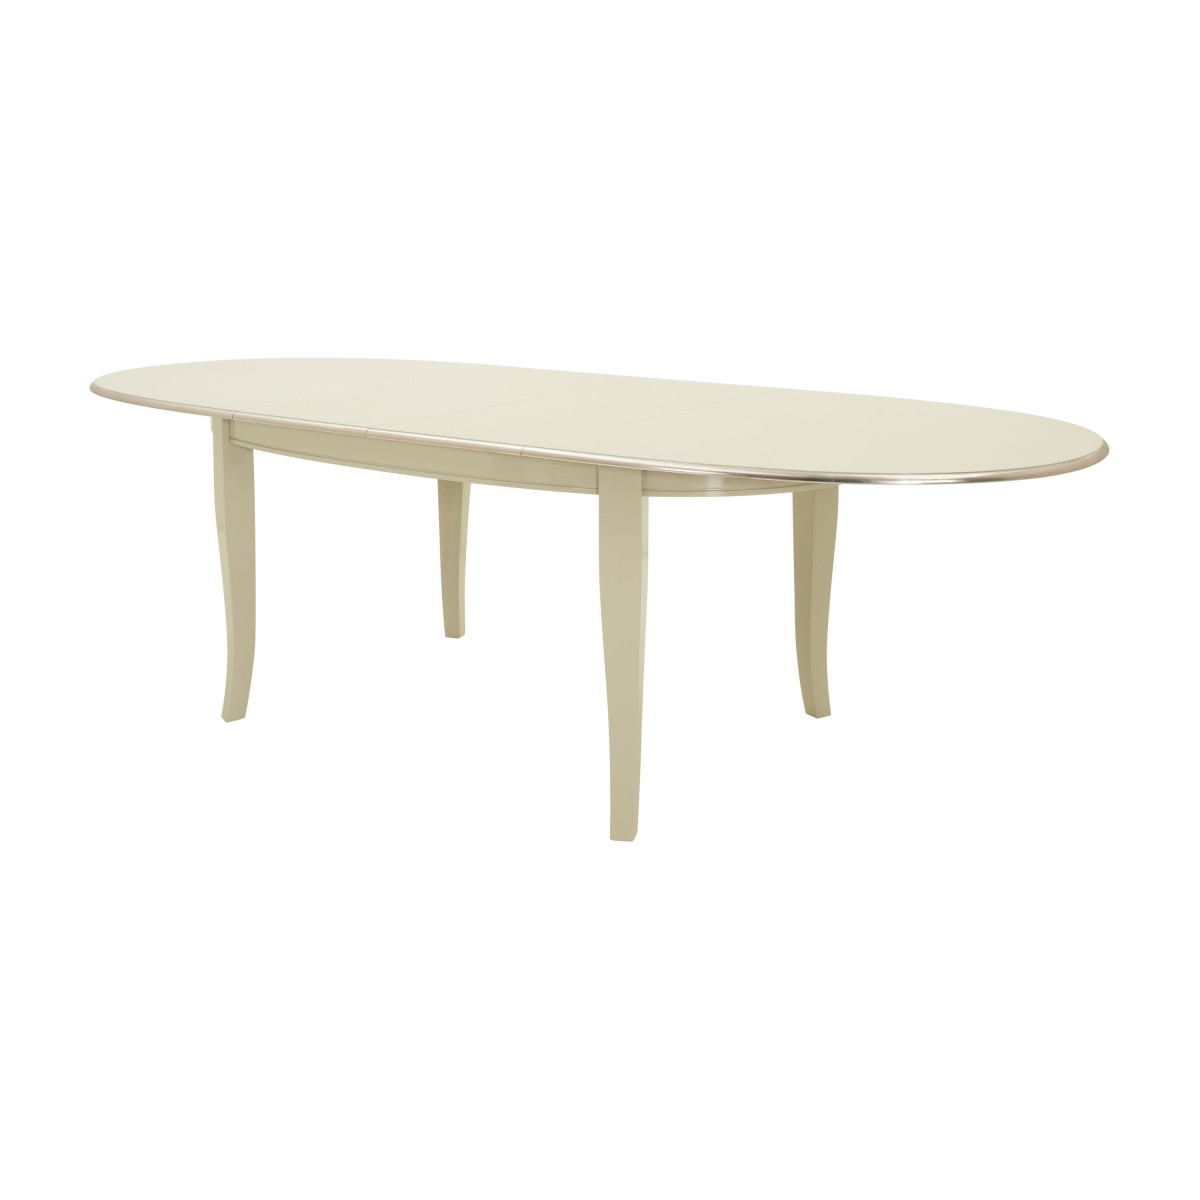 italian classic table radica 5 6626